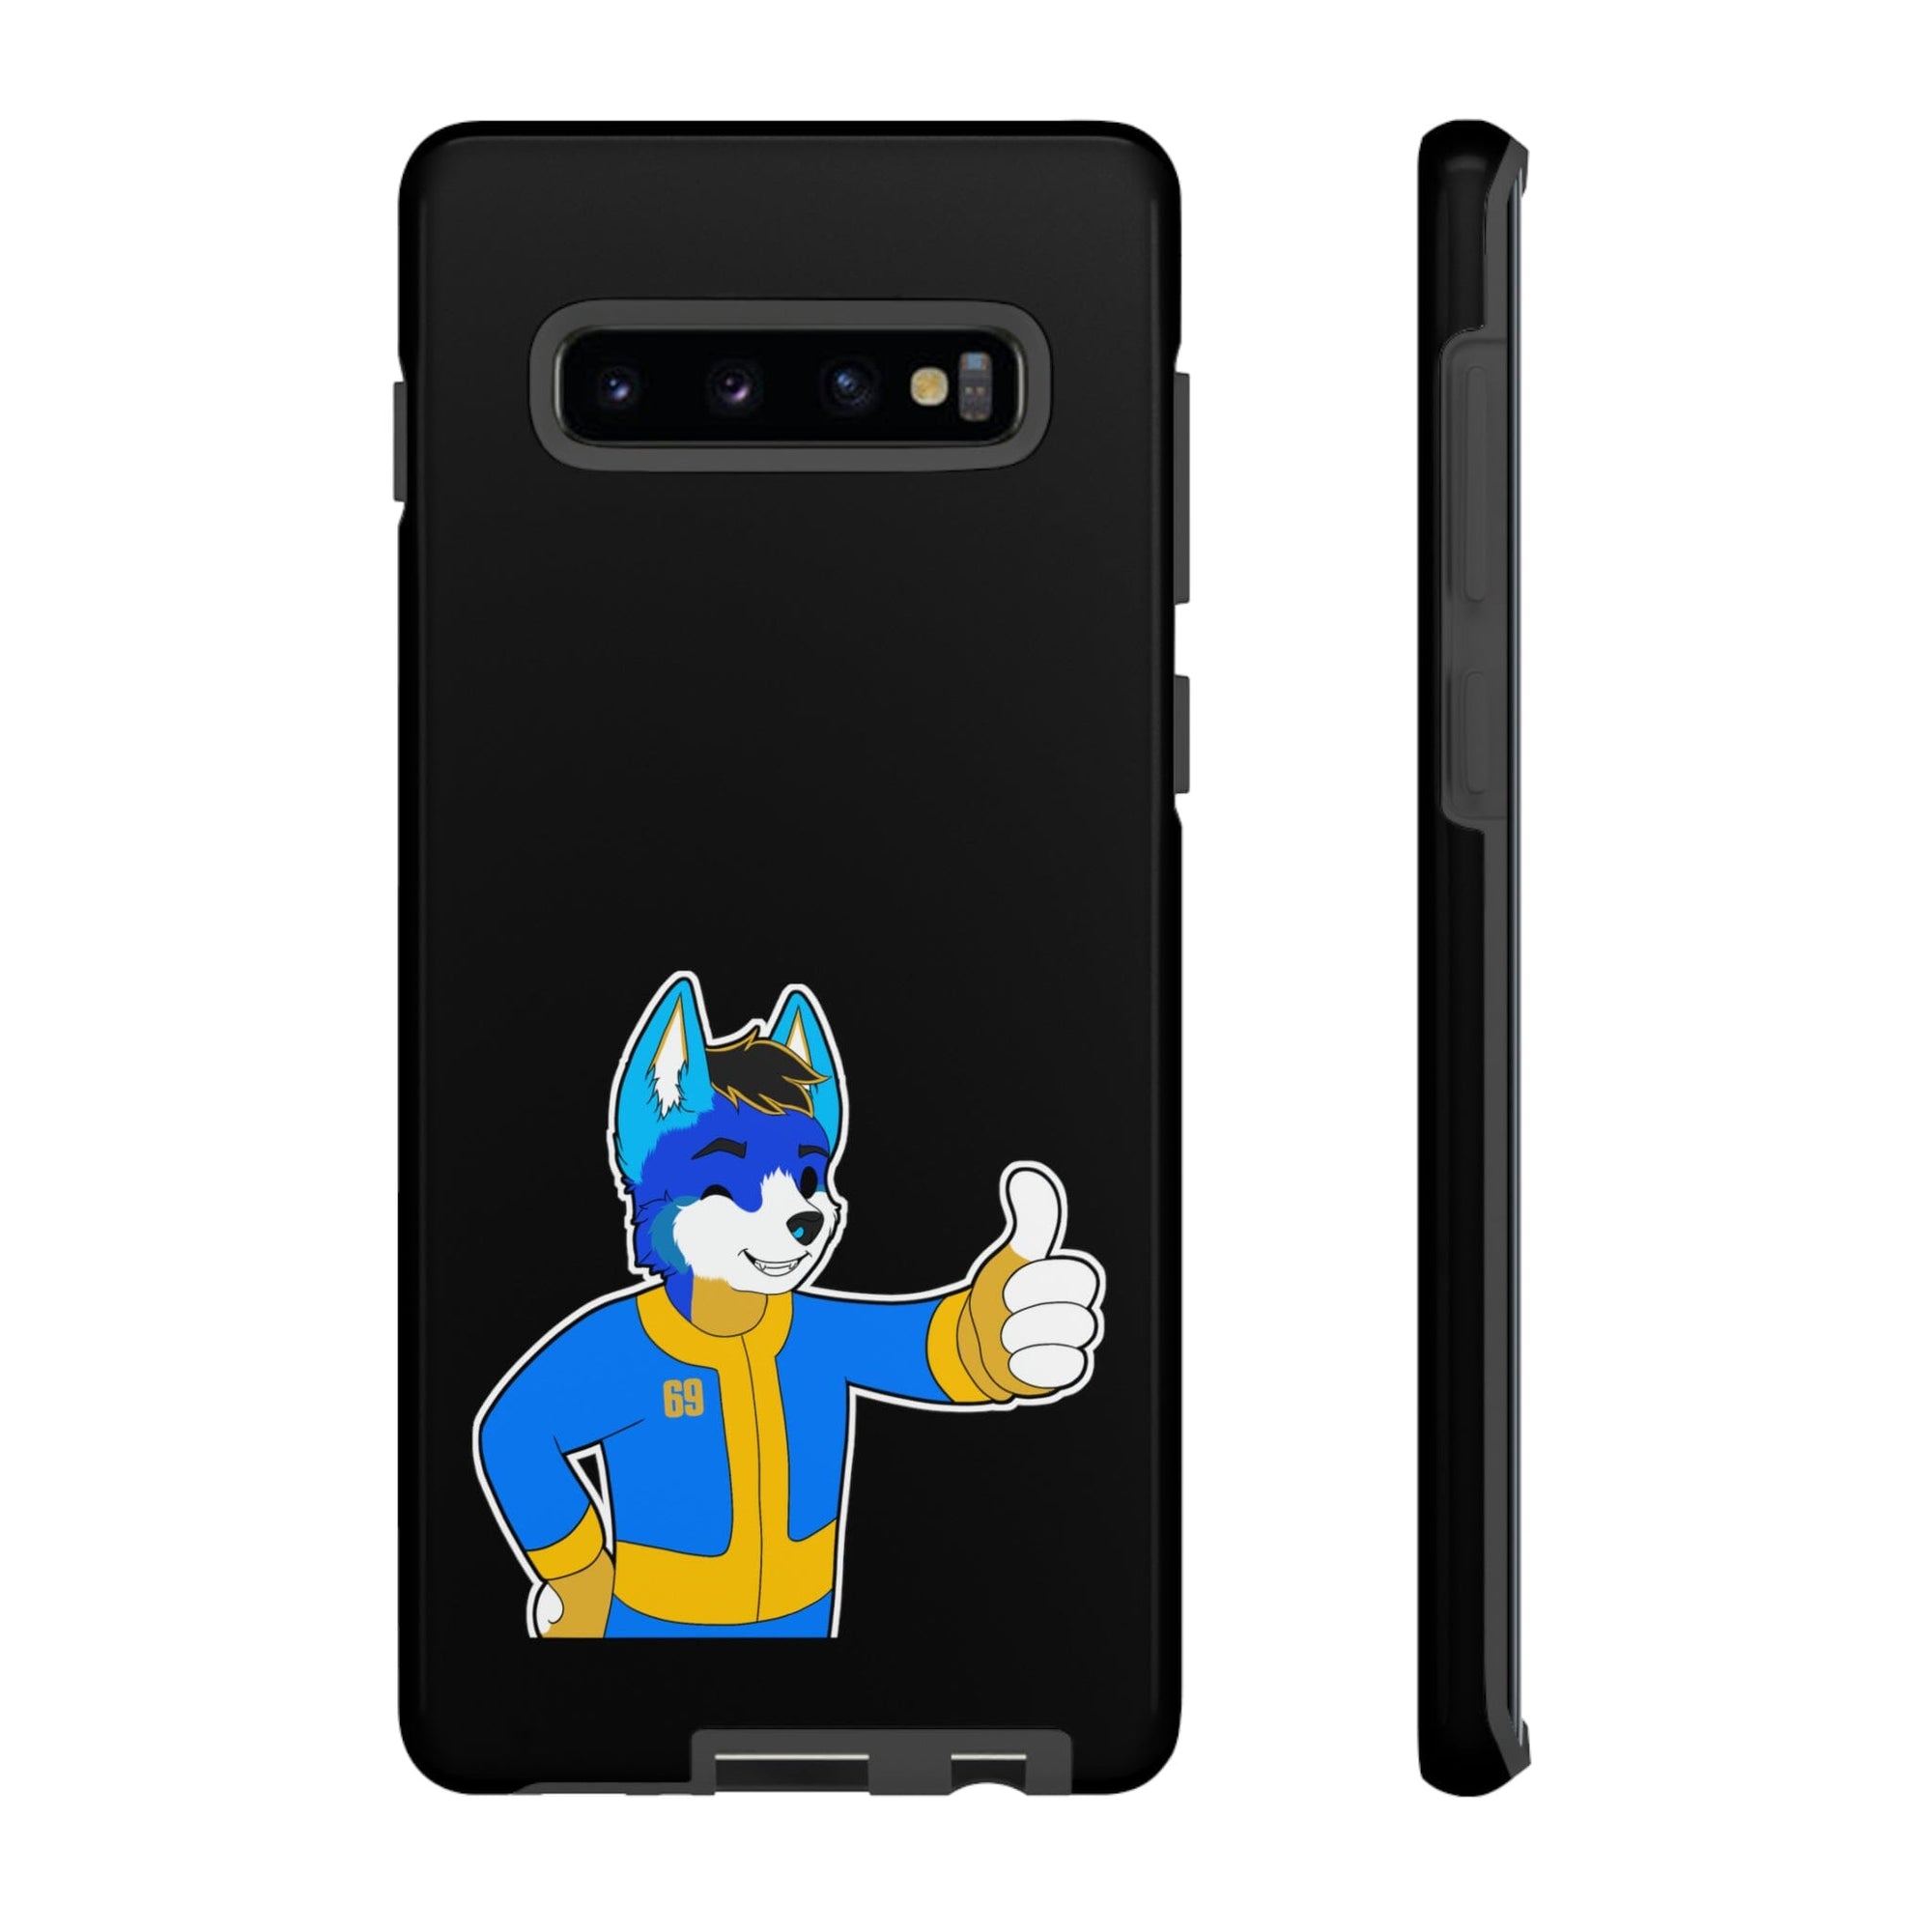 Hund The Hound - Fallout Hund - Phone Case Phone Case AFLT-Hund The Hound Glossy Samsung Galaxy S10 Plus 